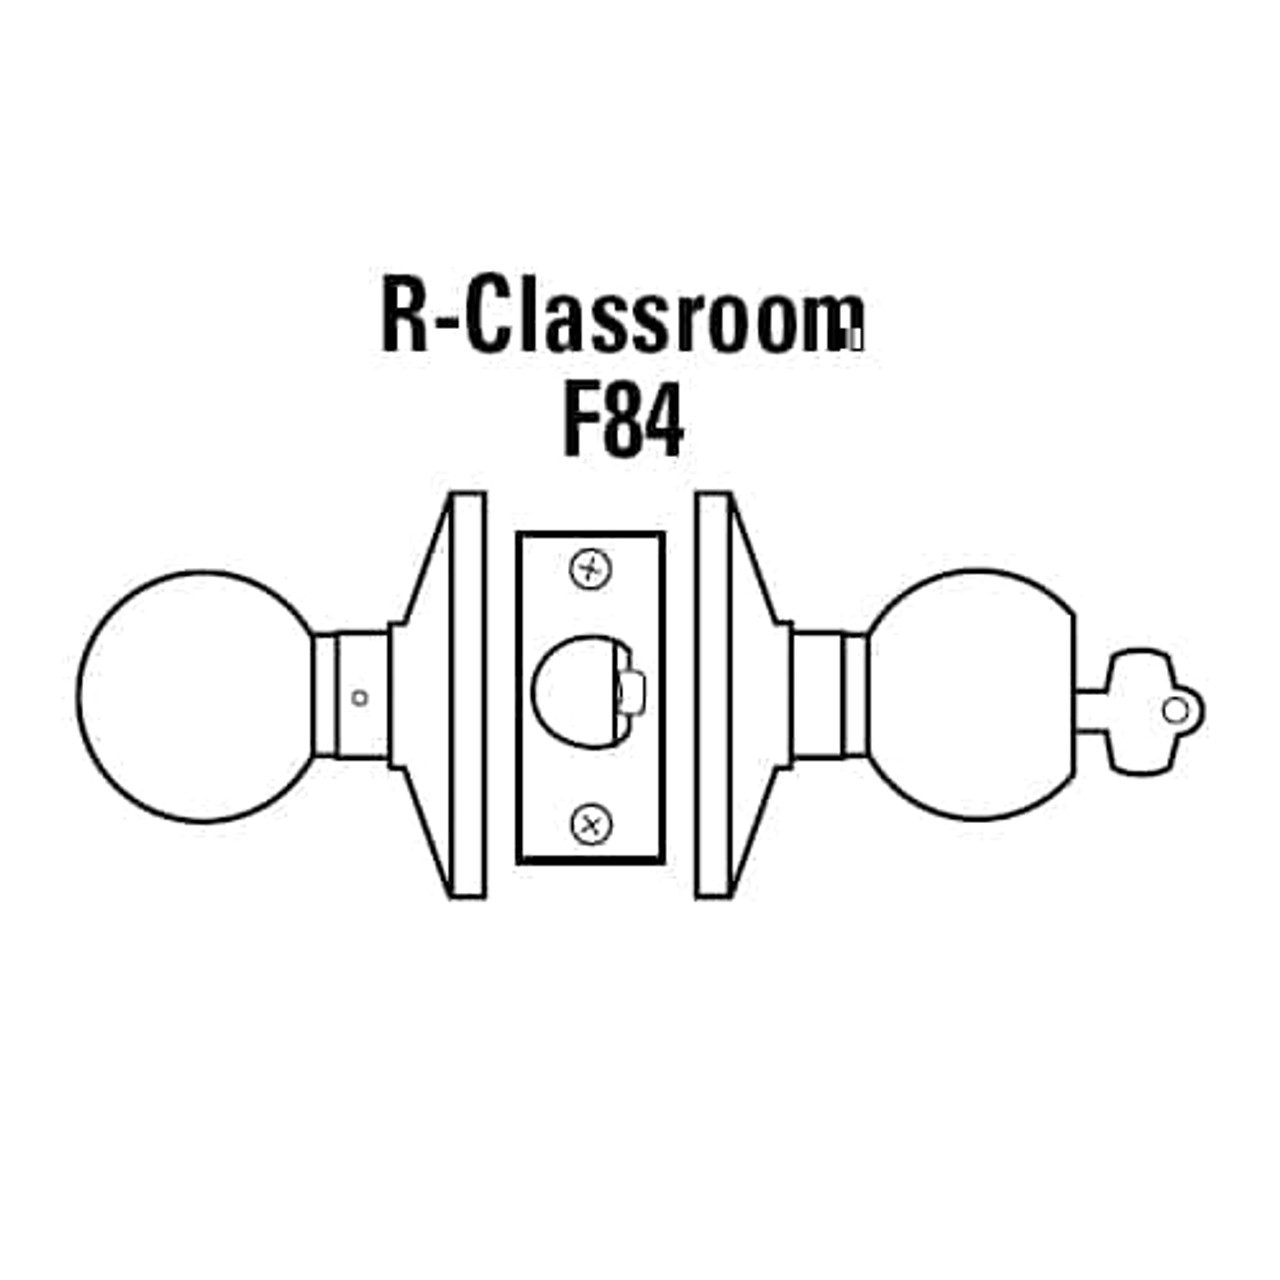 6K27R4CSTK605 Best 6K Series Medium Duty Classroom Cylindrical Knob Locks with Round Style in Bright Brass